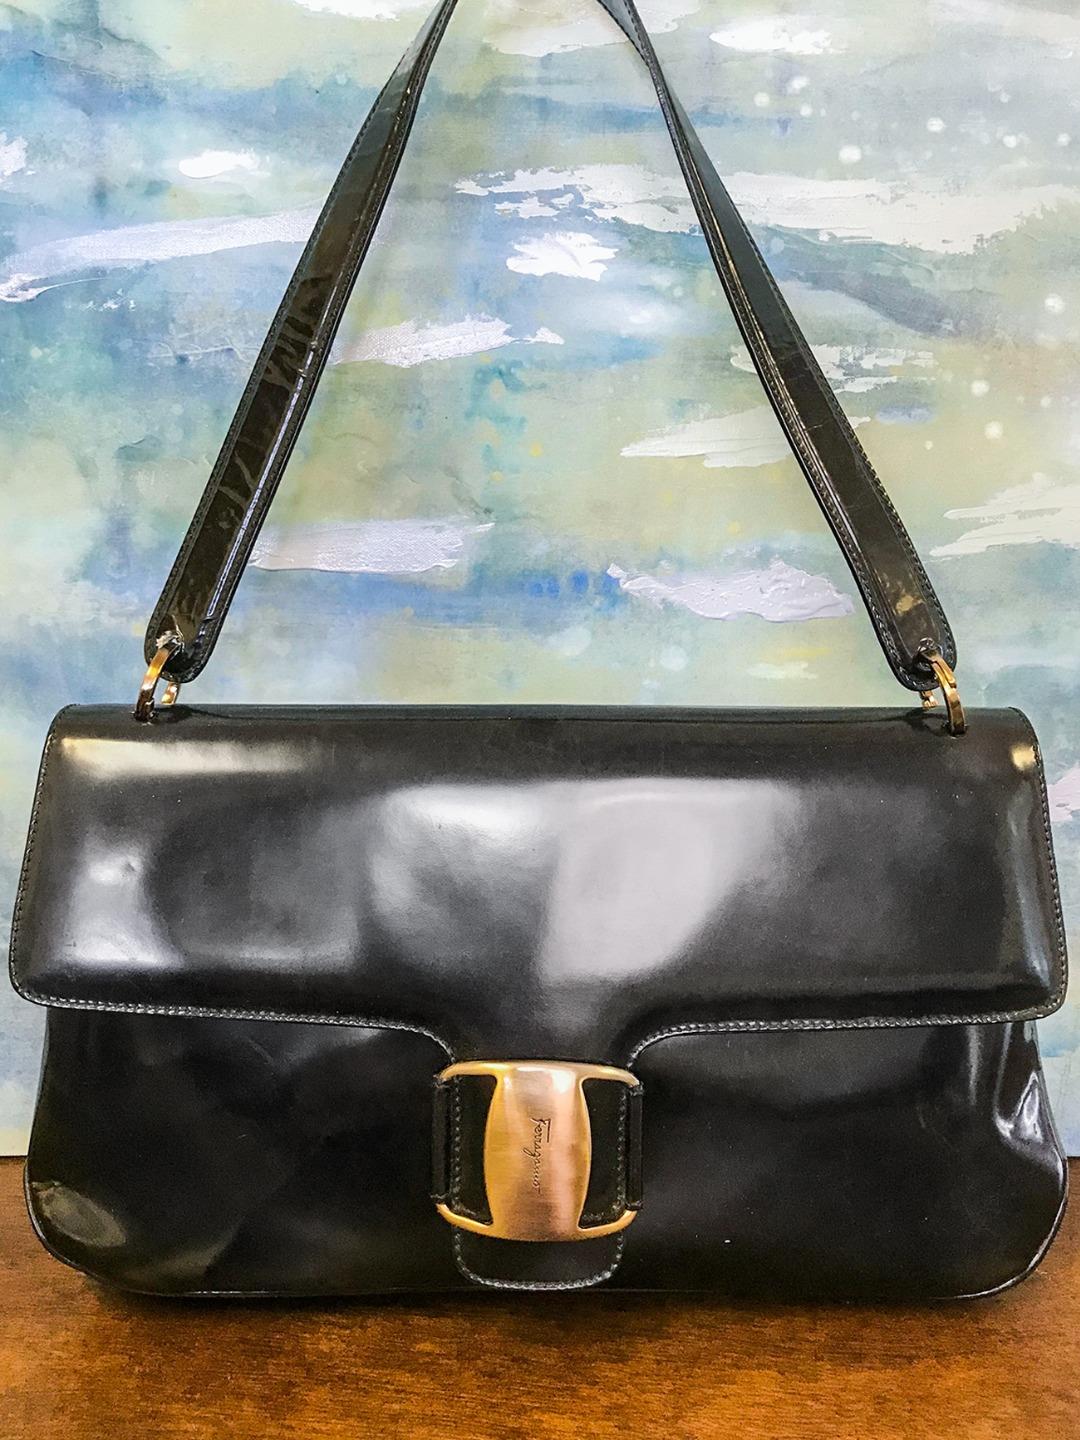 SALVATORE FERRAGAMO Black Patent Leather Gold Buckle Flap Shoulder Bag on SALE! | eBay